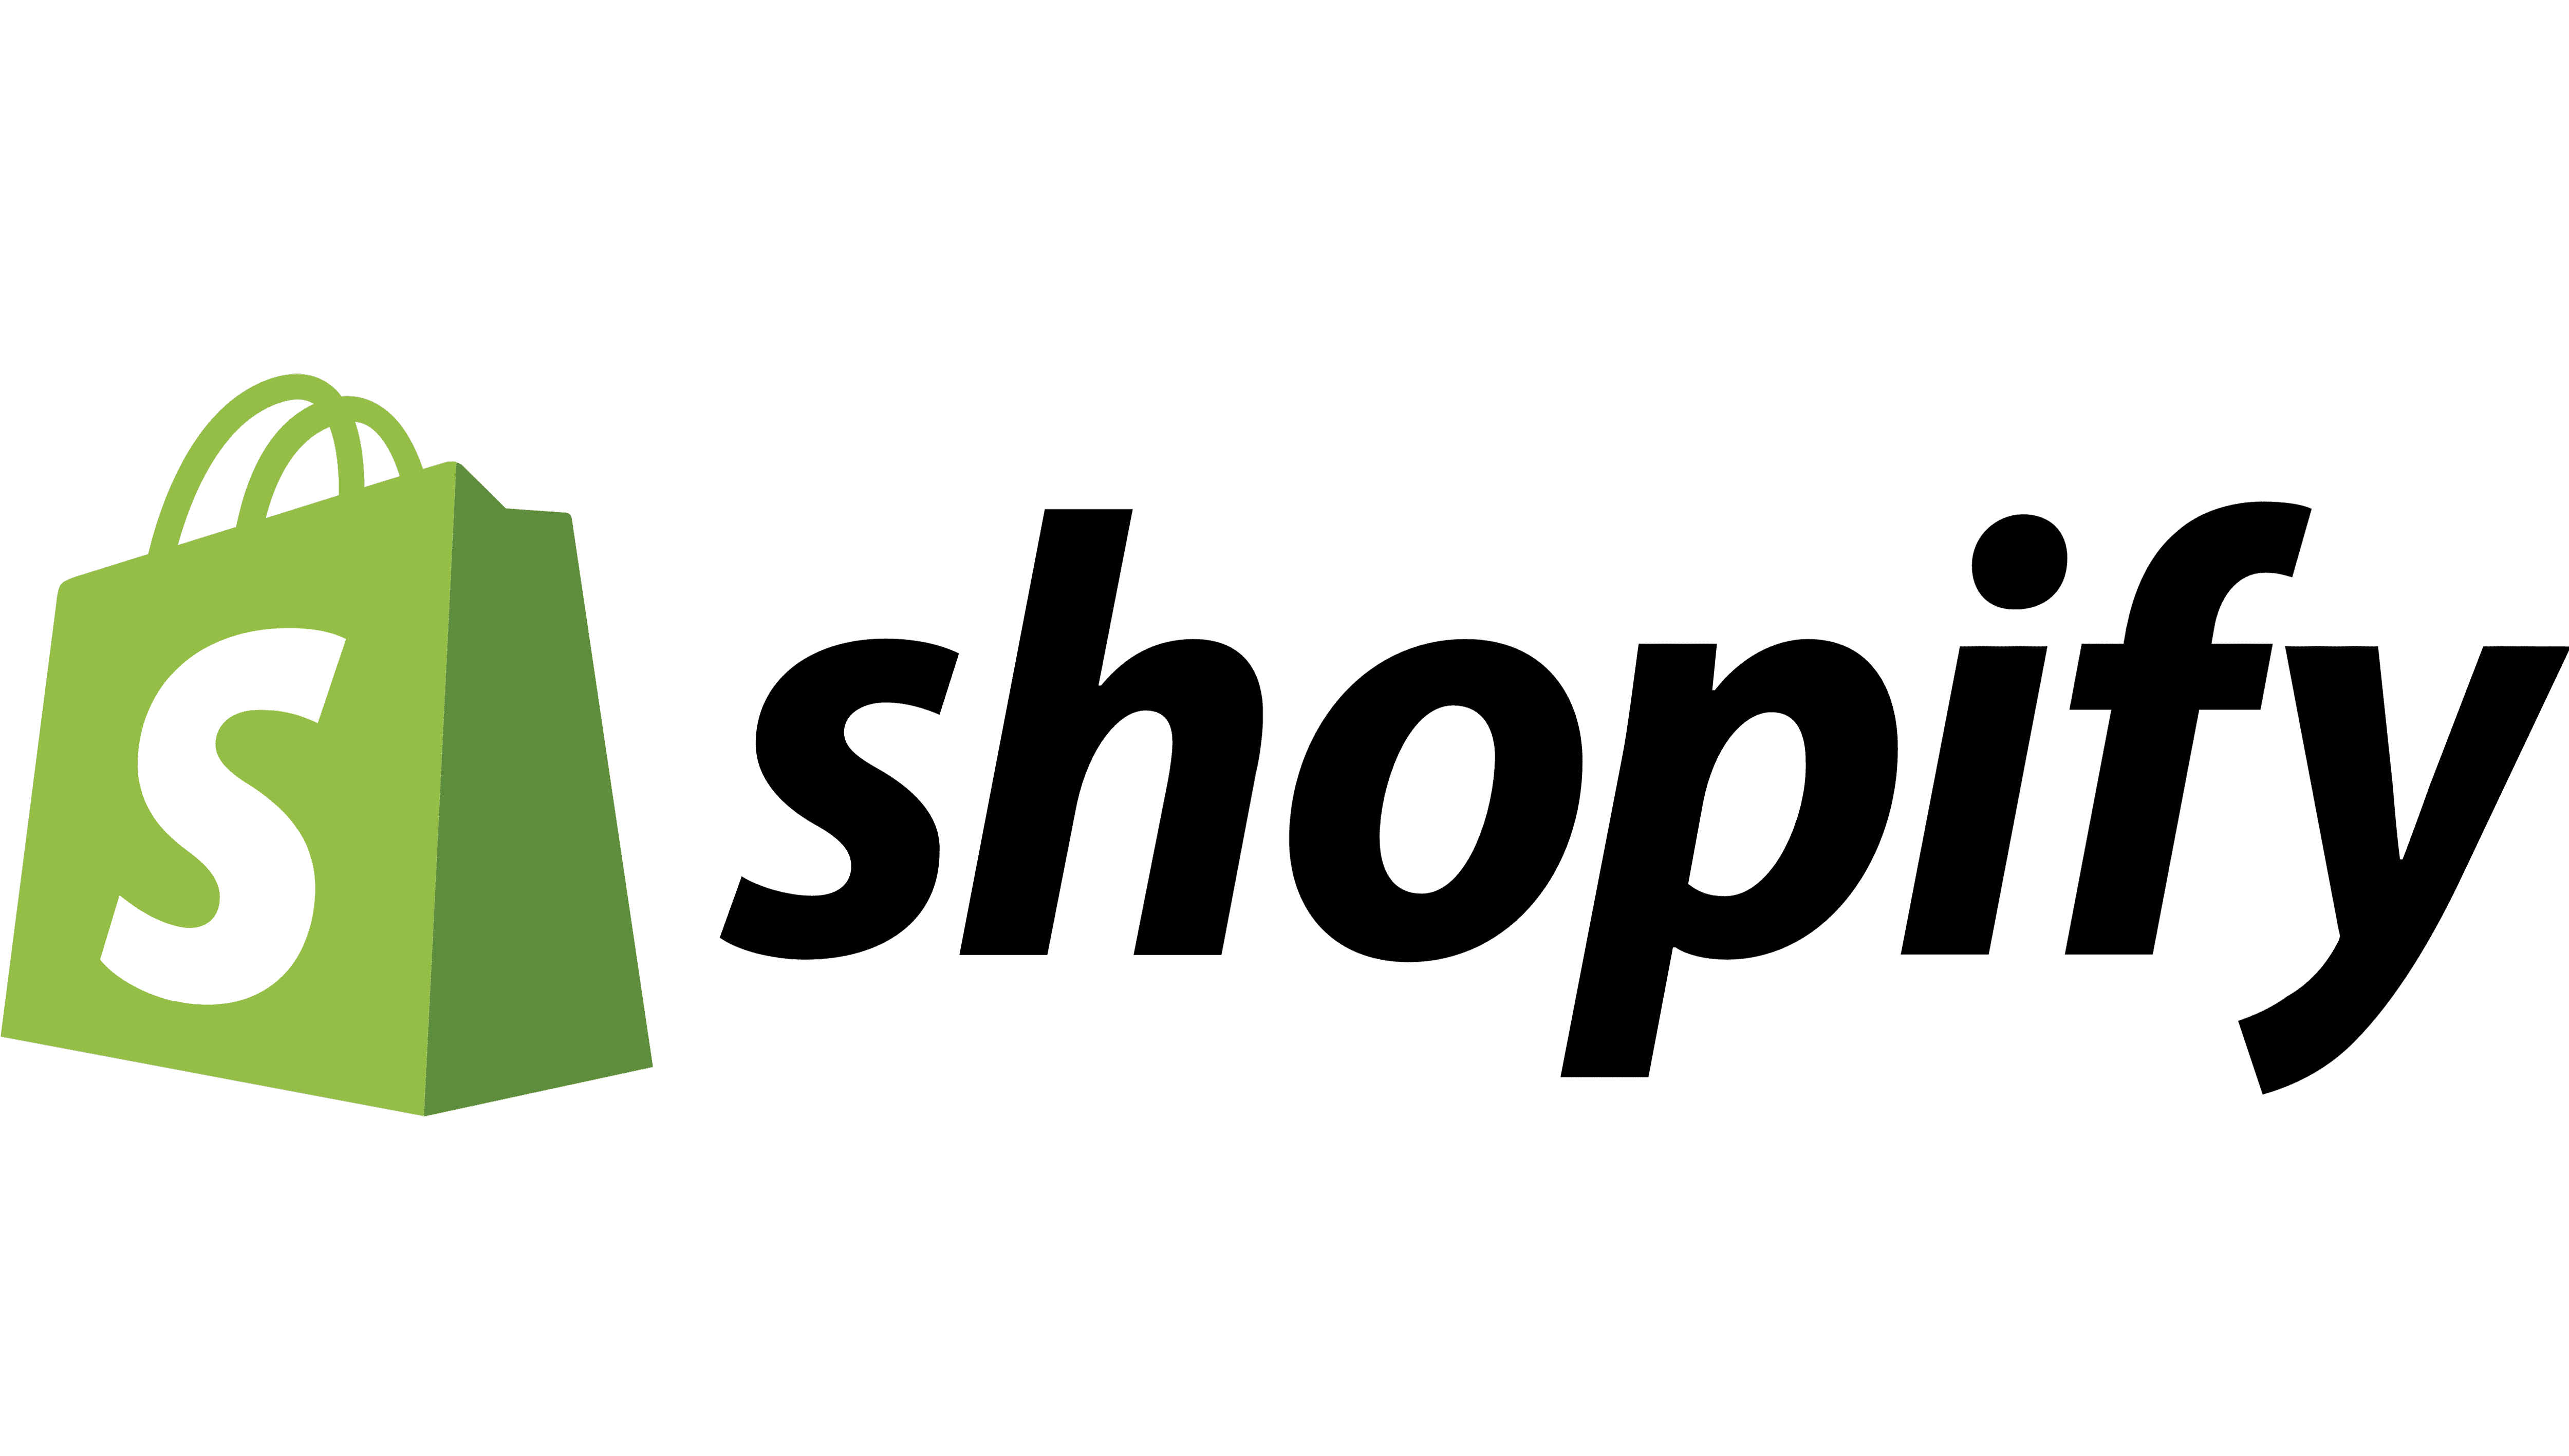 Shopify-Logo